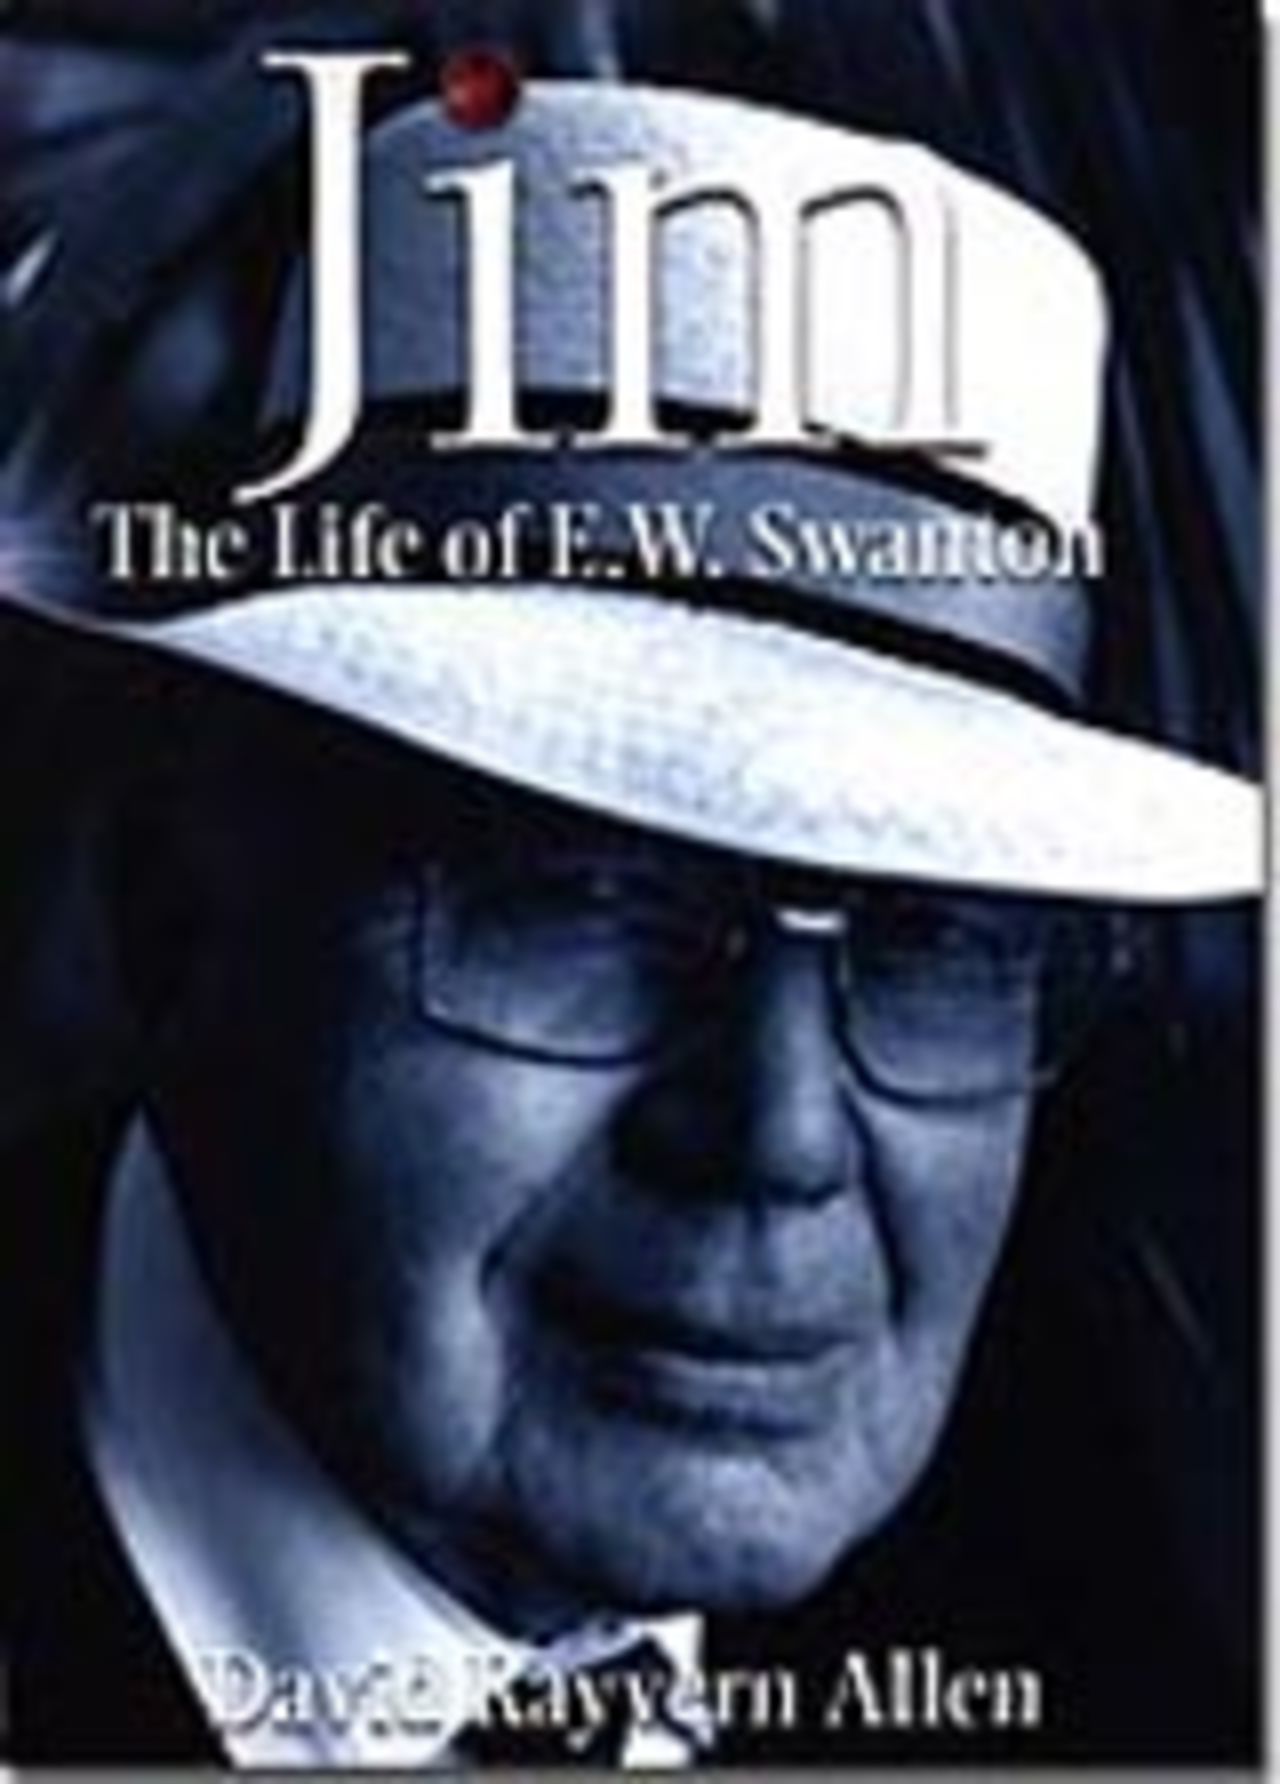 Jim - The Life of E.W. Swanton, September 16 2004